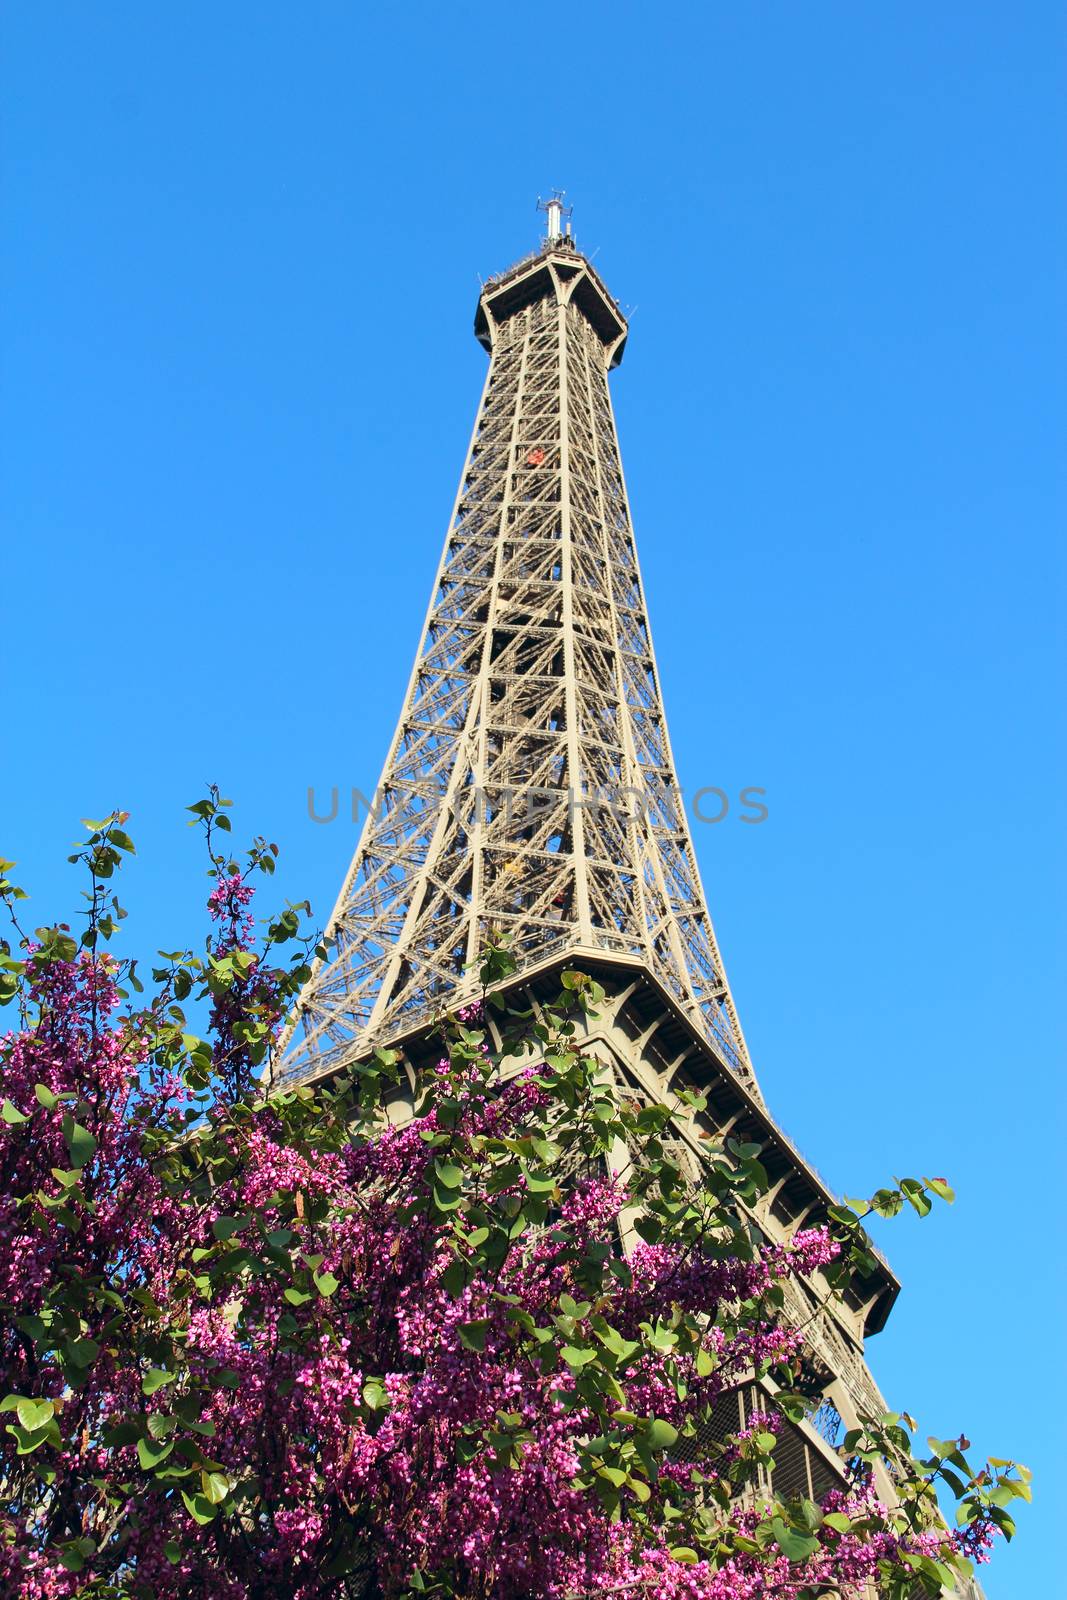 The Eiffel Tower in Paris, France by destillat